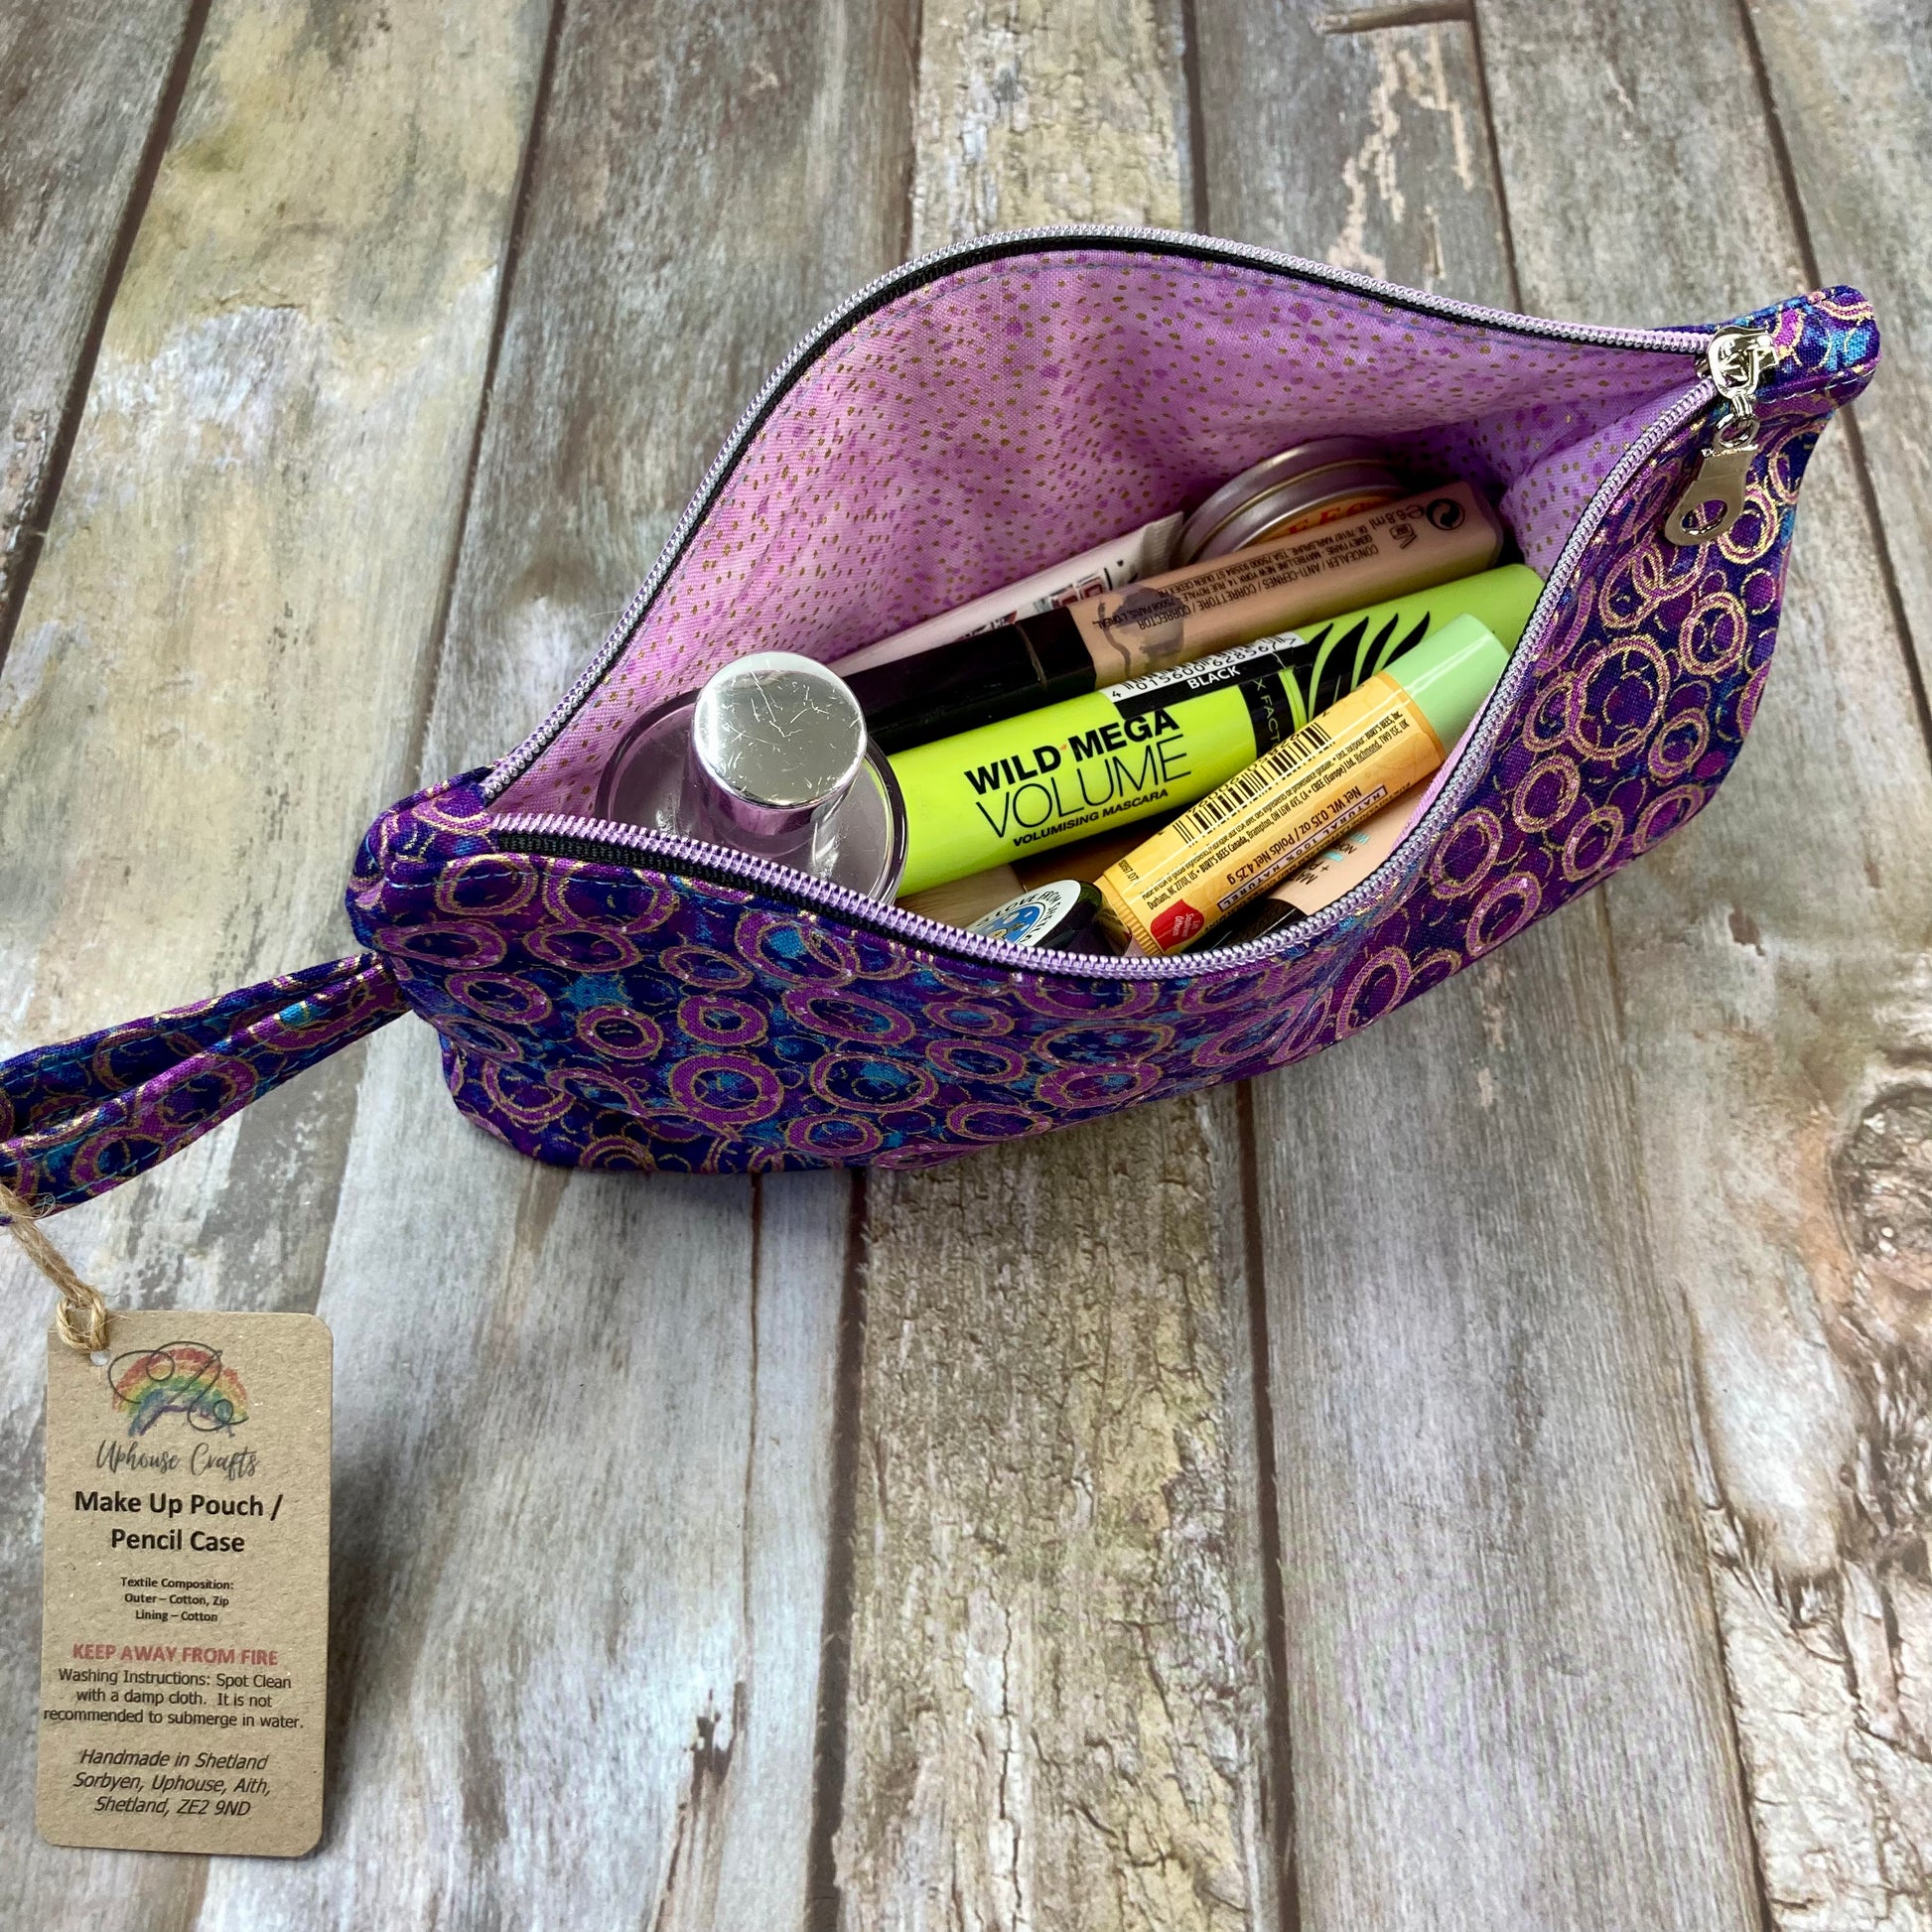 Makeup Bag Pencil Case - Hummingbird, Purple Gold Shimmer - Uphouse Crafts